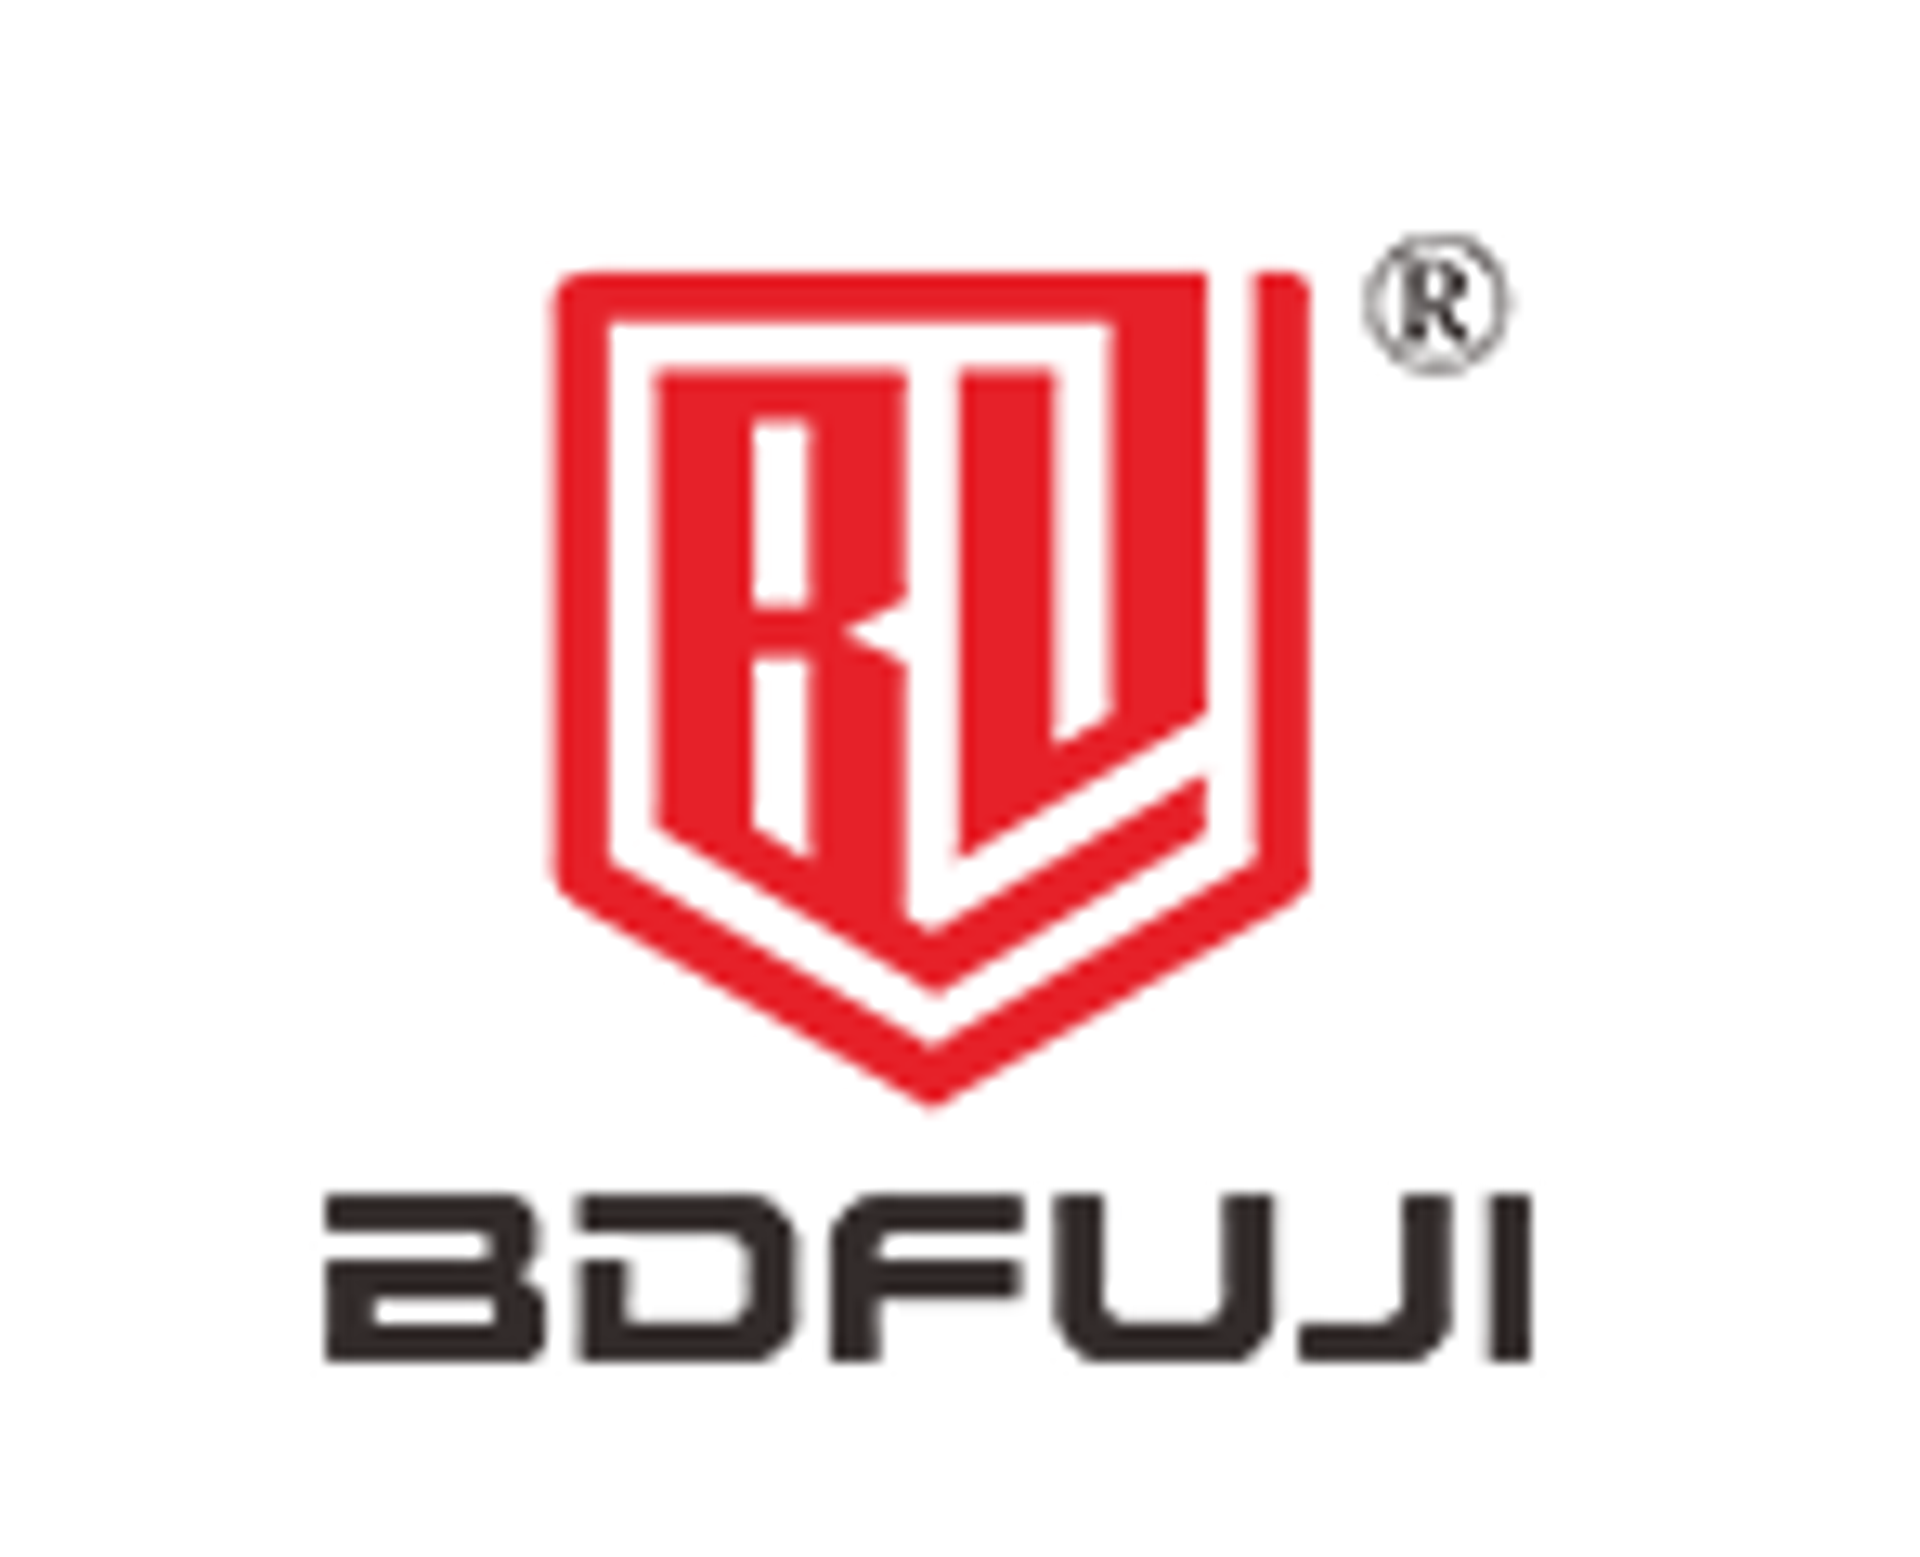 Suzhou BDFUJI Elevator Co., Ltd.